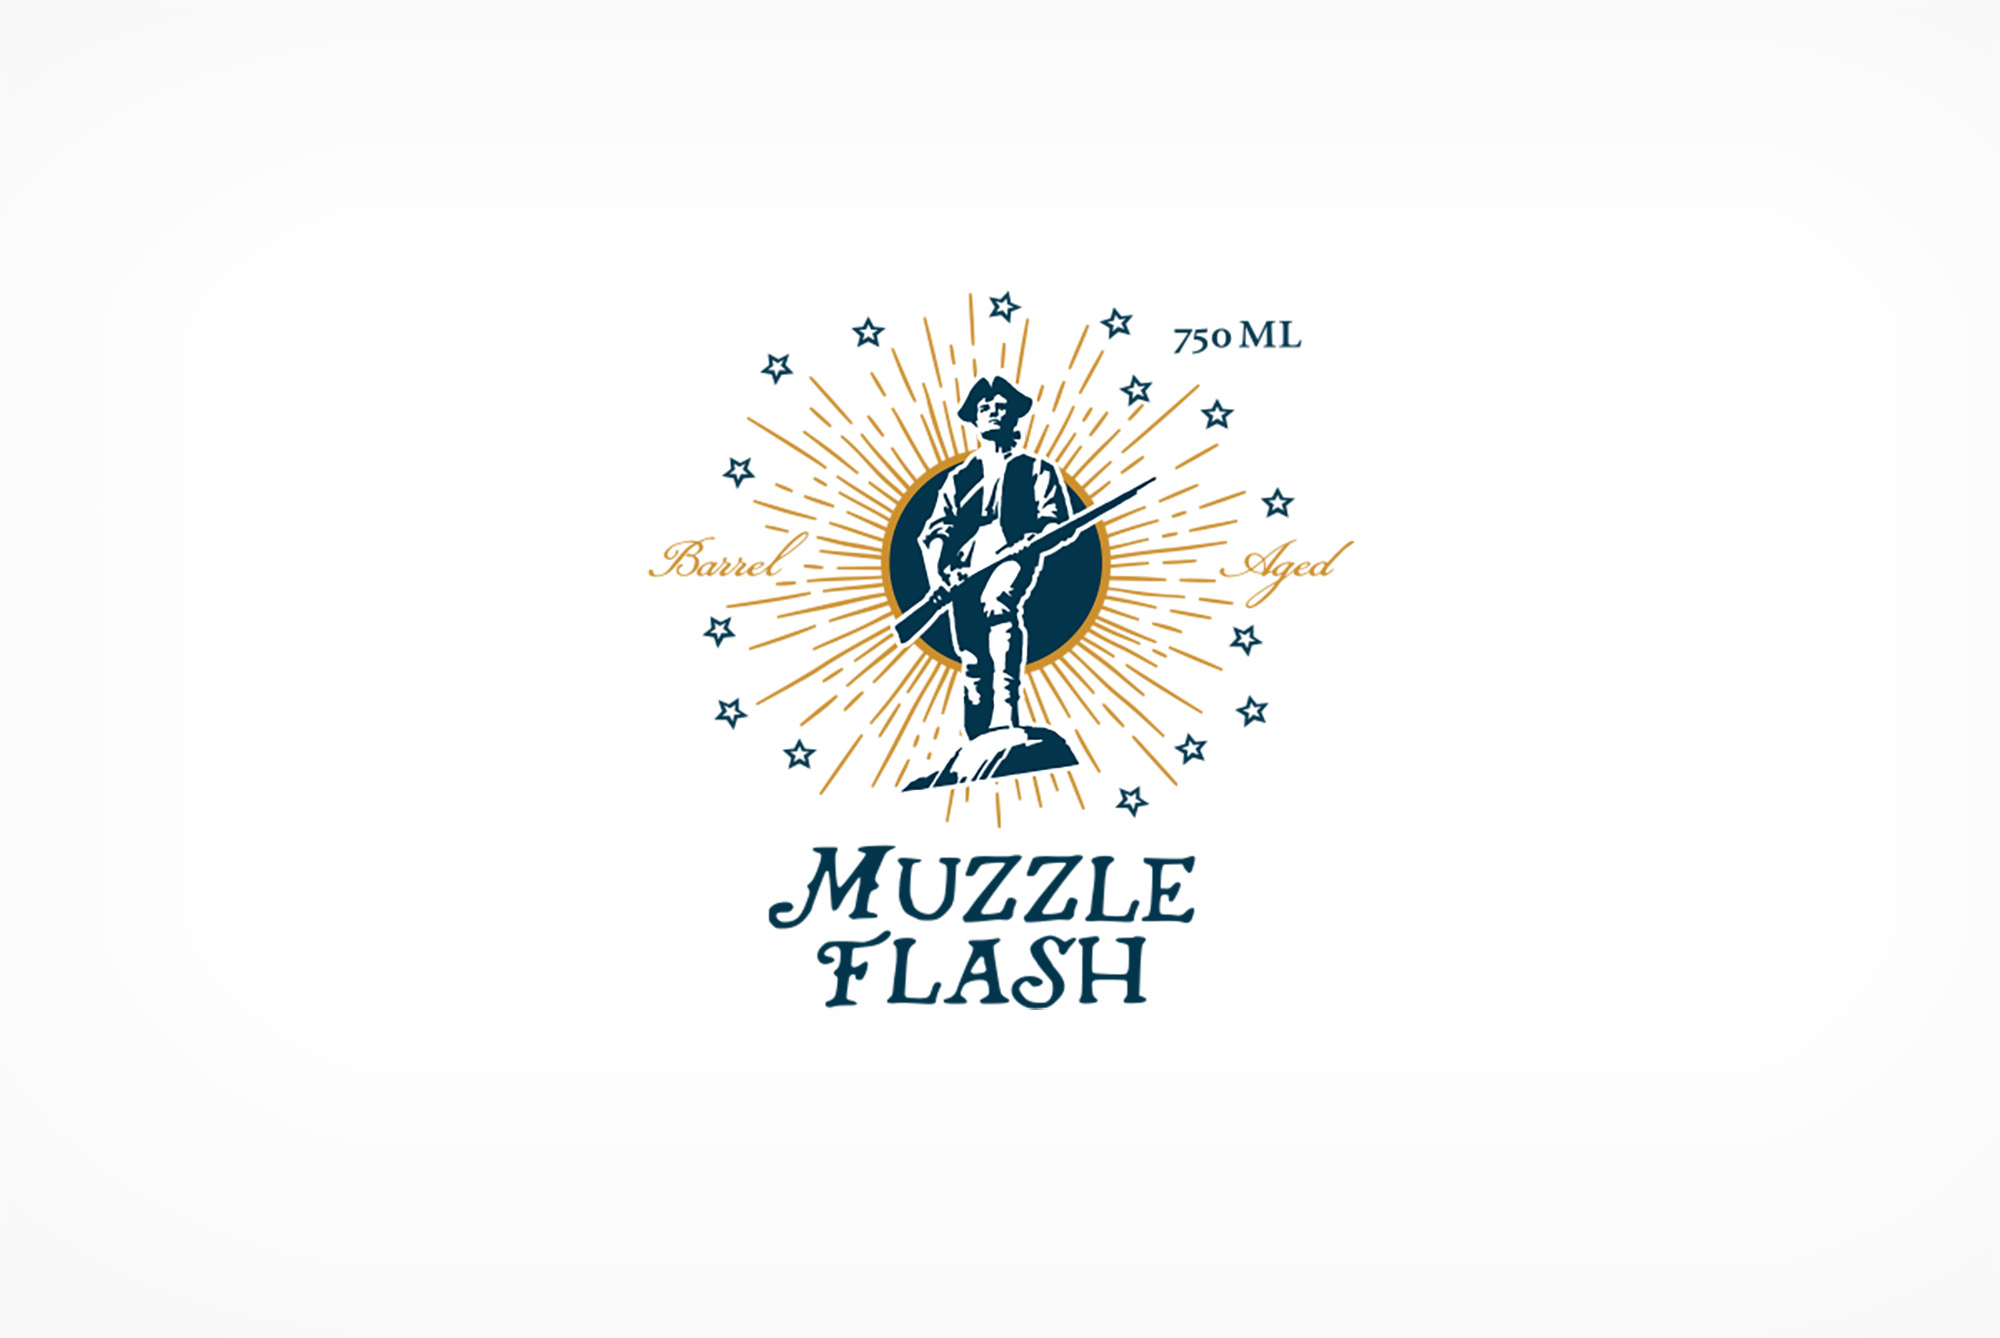 Chuckanut Bay Distillery's Muzzle Flash Barrel Aged Whiskey logo.